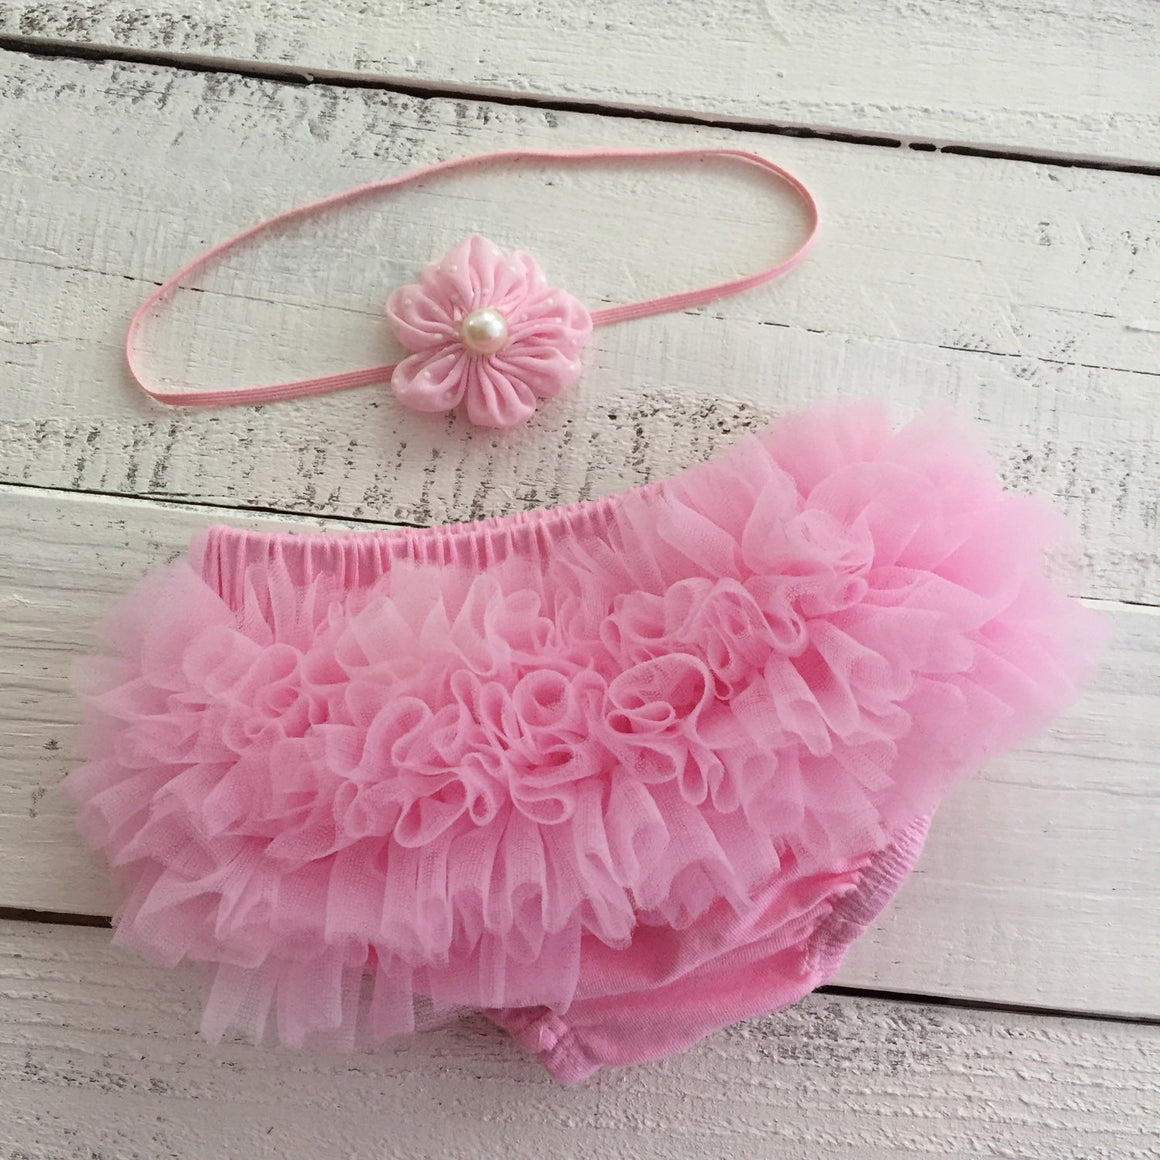 Light Pink ruffle bottom bloomers and polka dot flower skinny headband - HoneyLoveBoutique